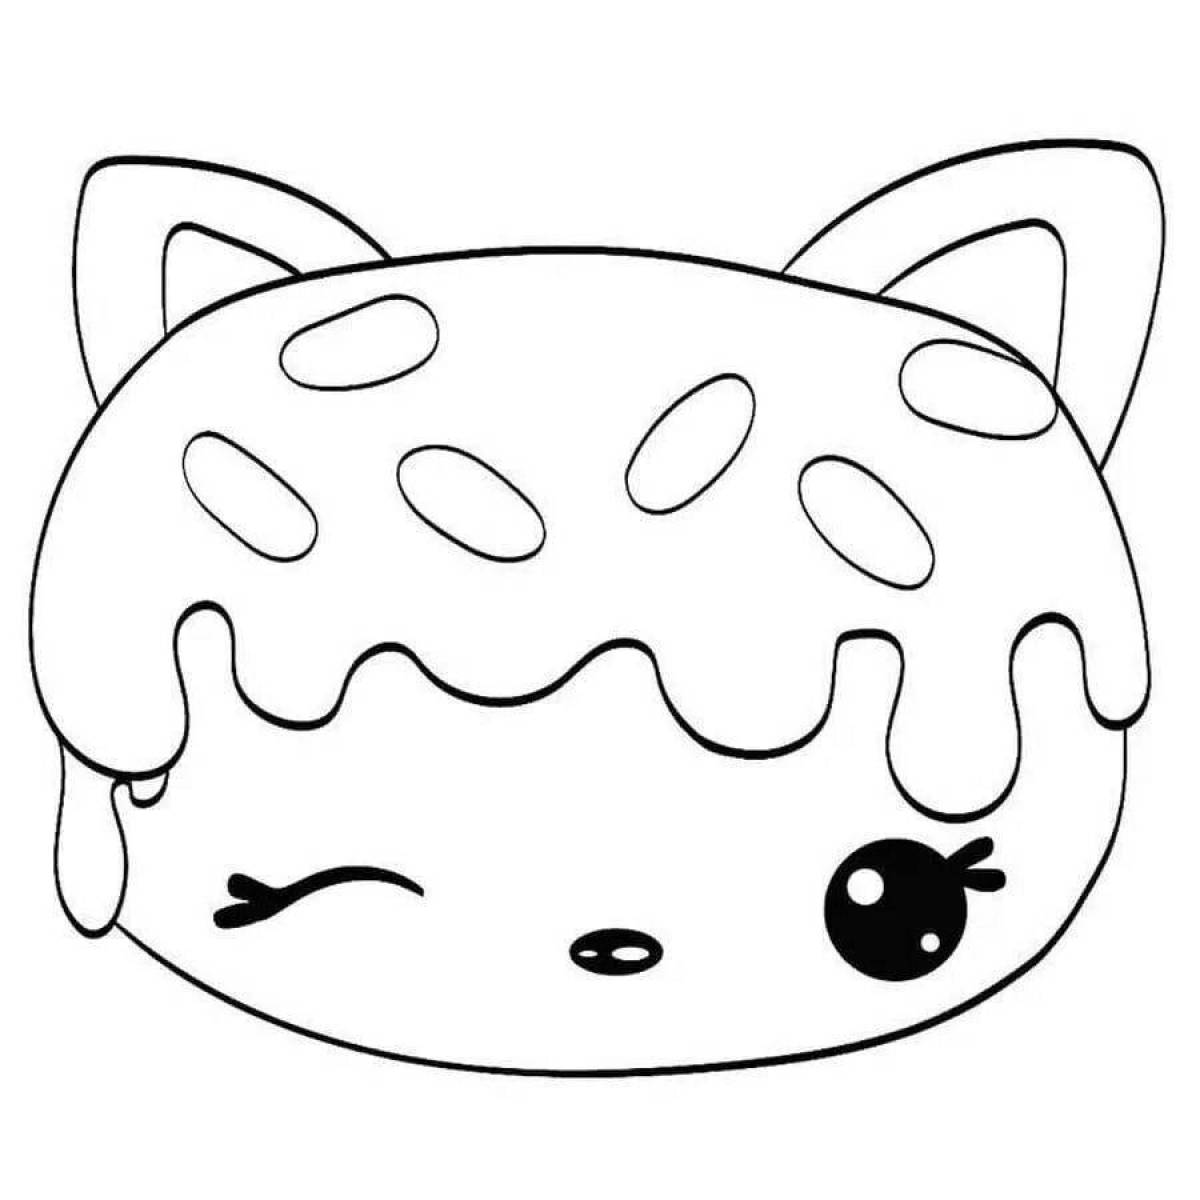 Zani donut cat coloring page